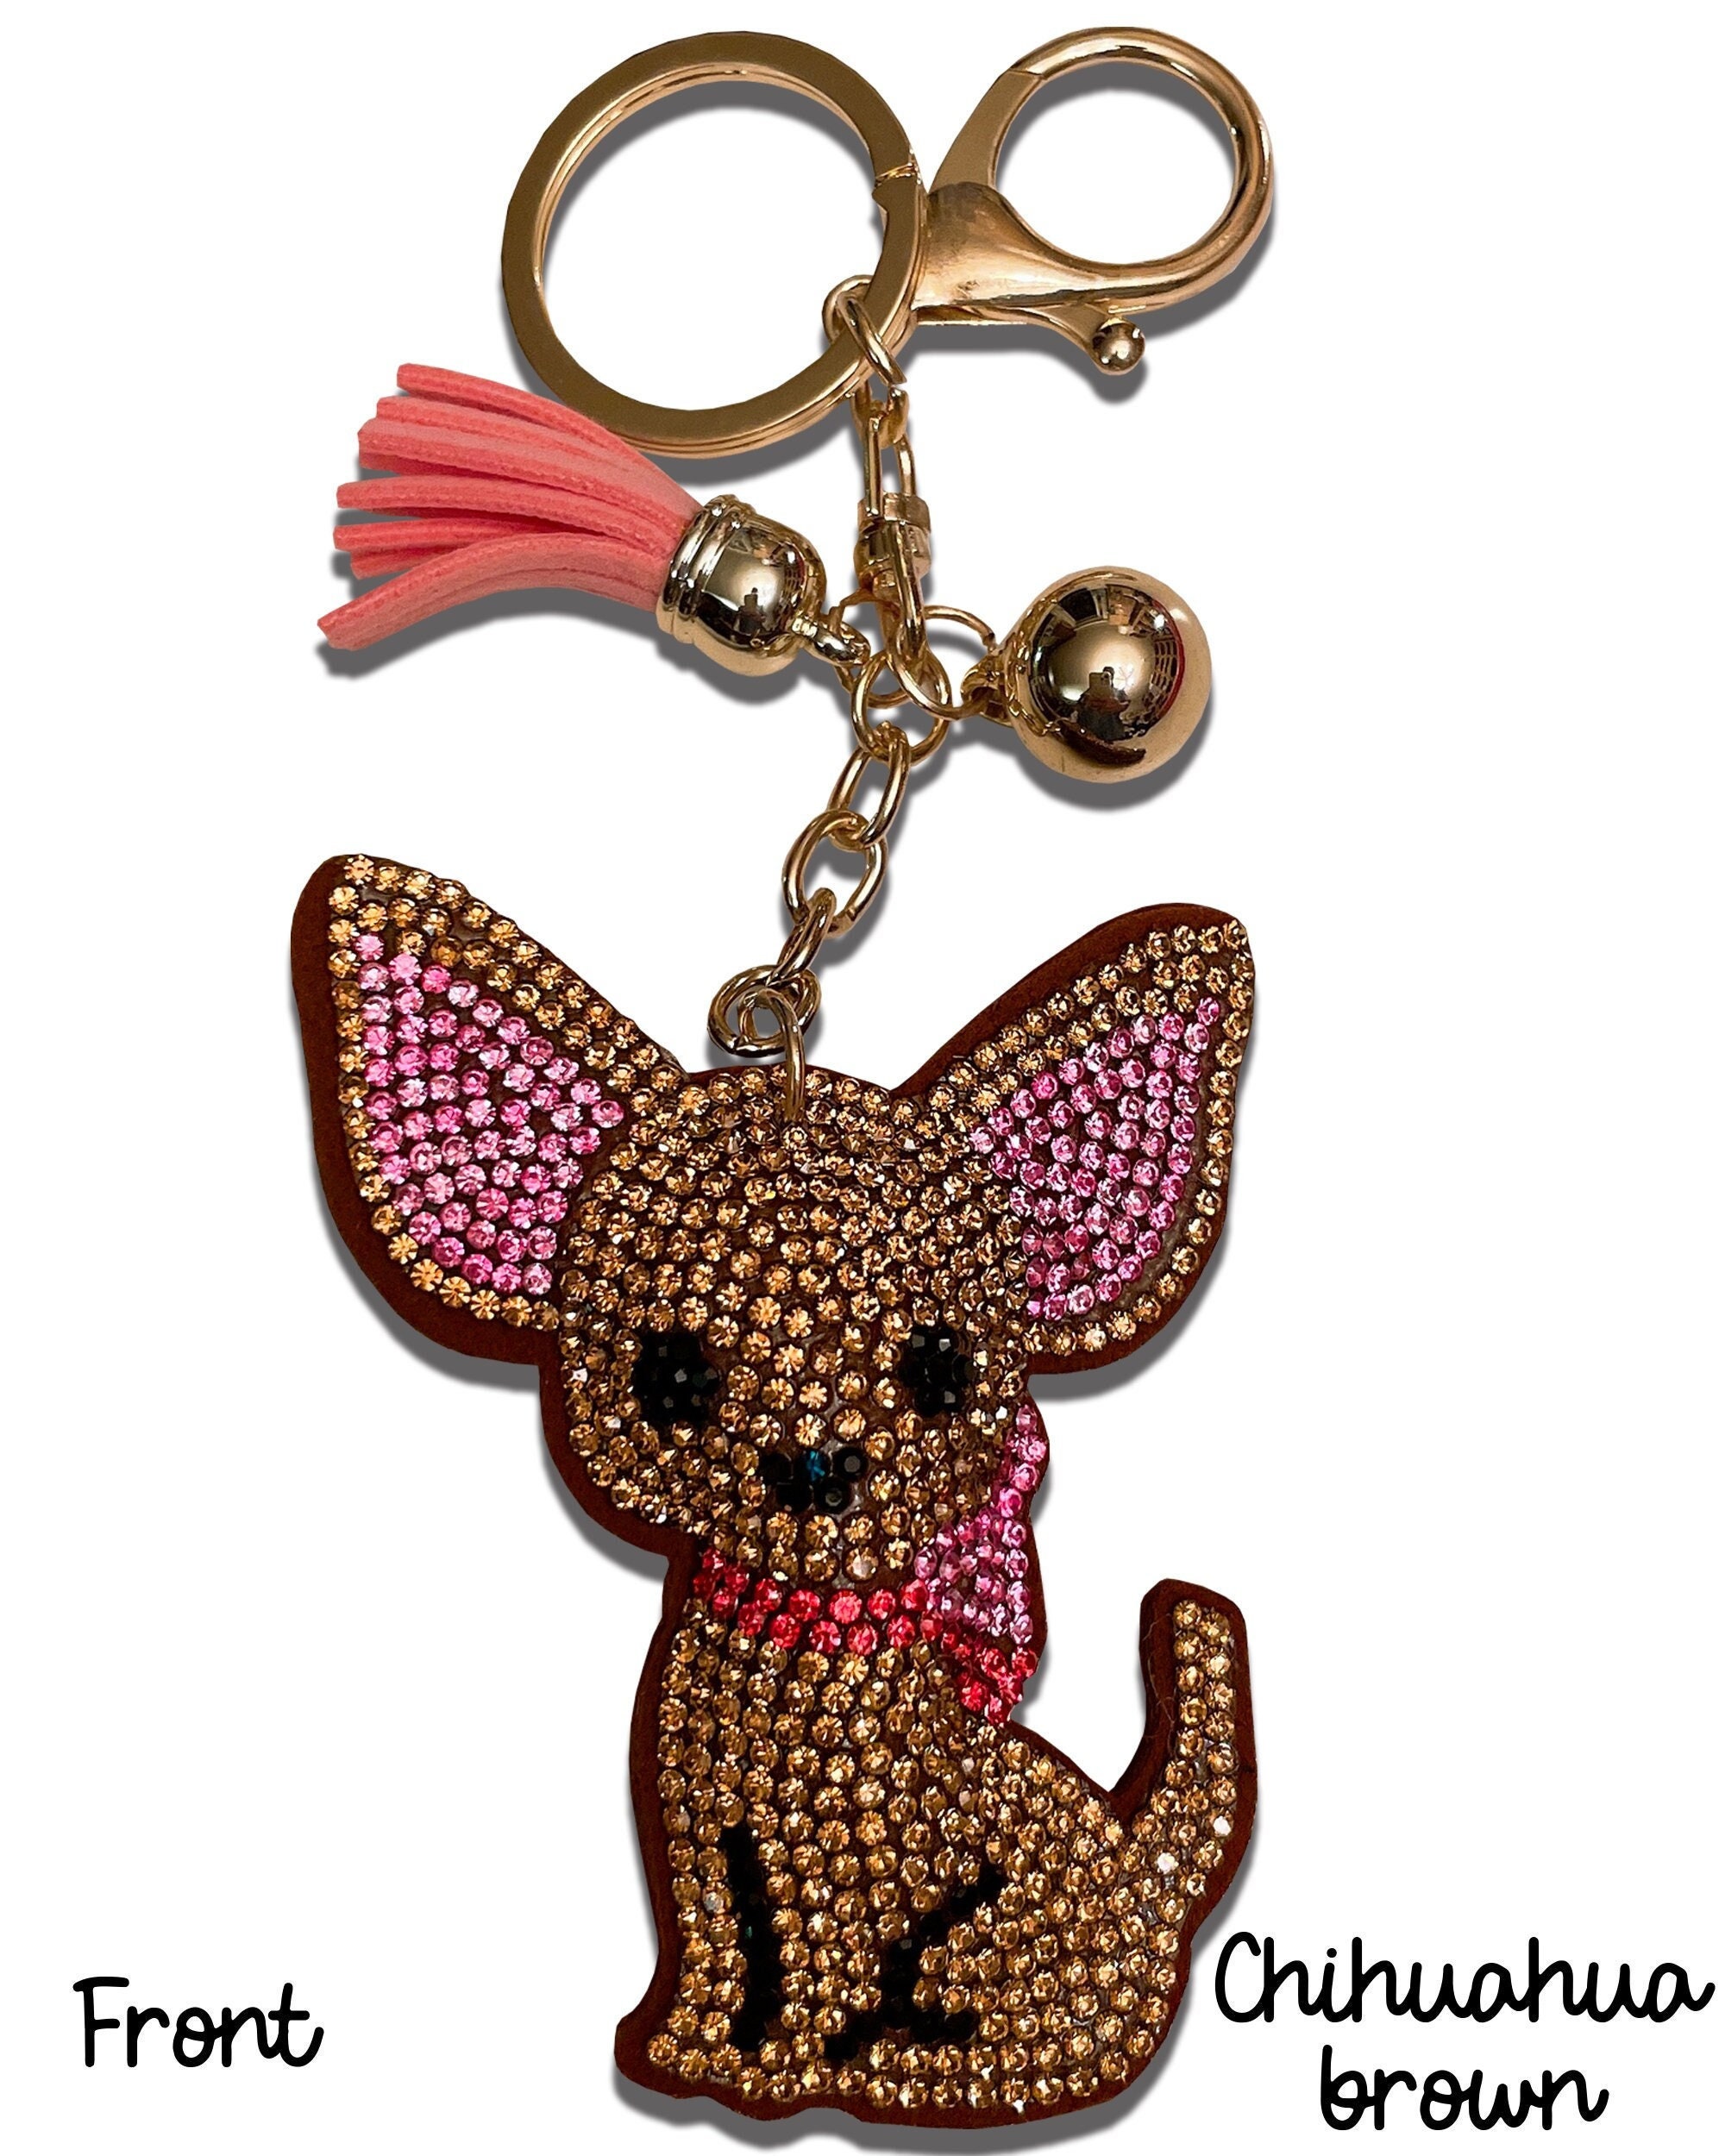 Goldenhorn Chihuahua Crystal Rhinestone Dog Keychain, Key Fob or Purse or Backpack Charm 2 Colors Tan